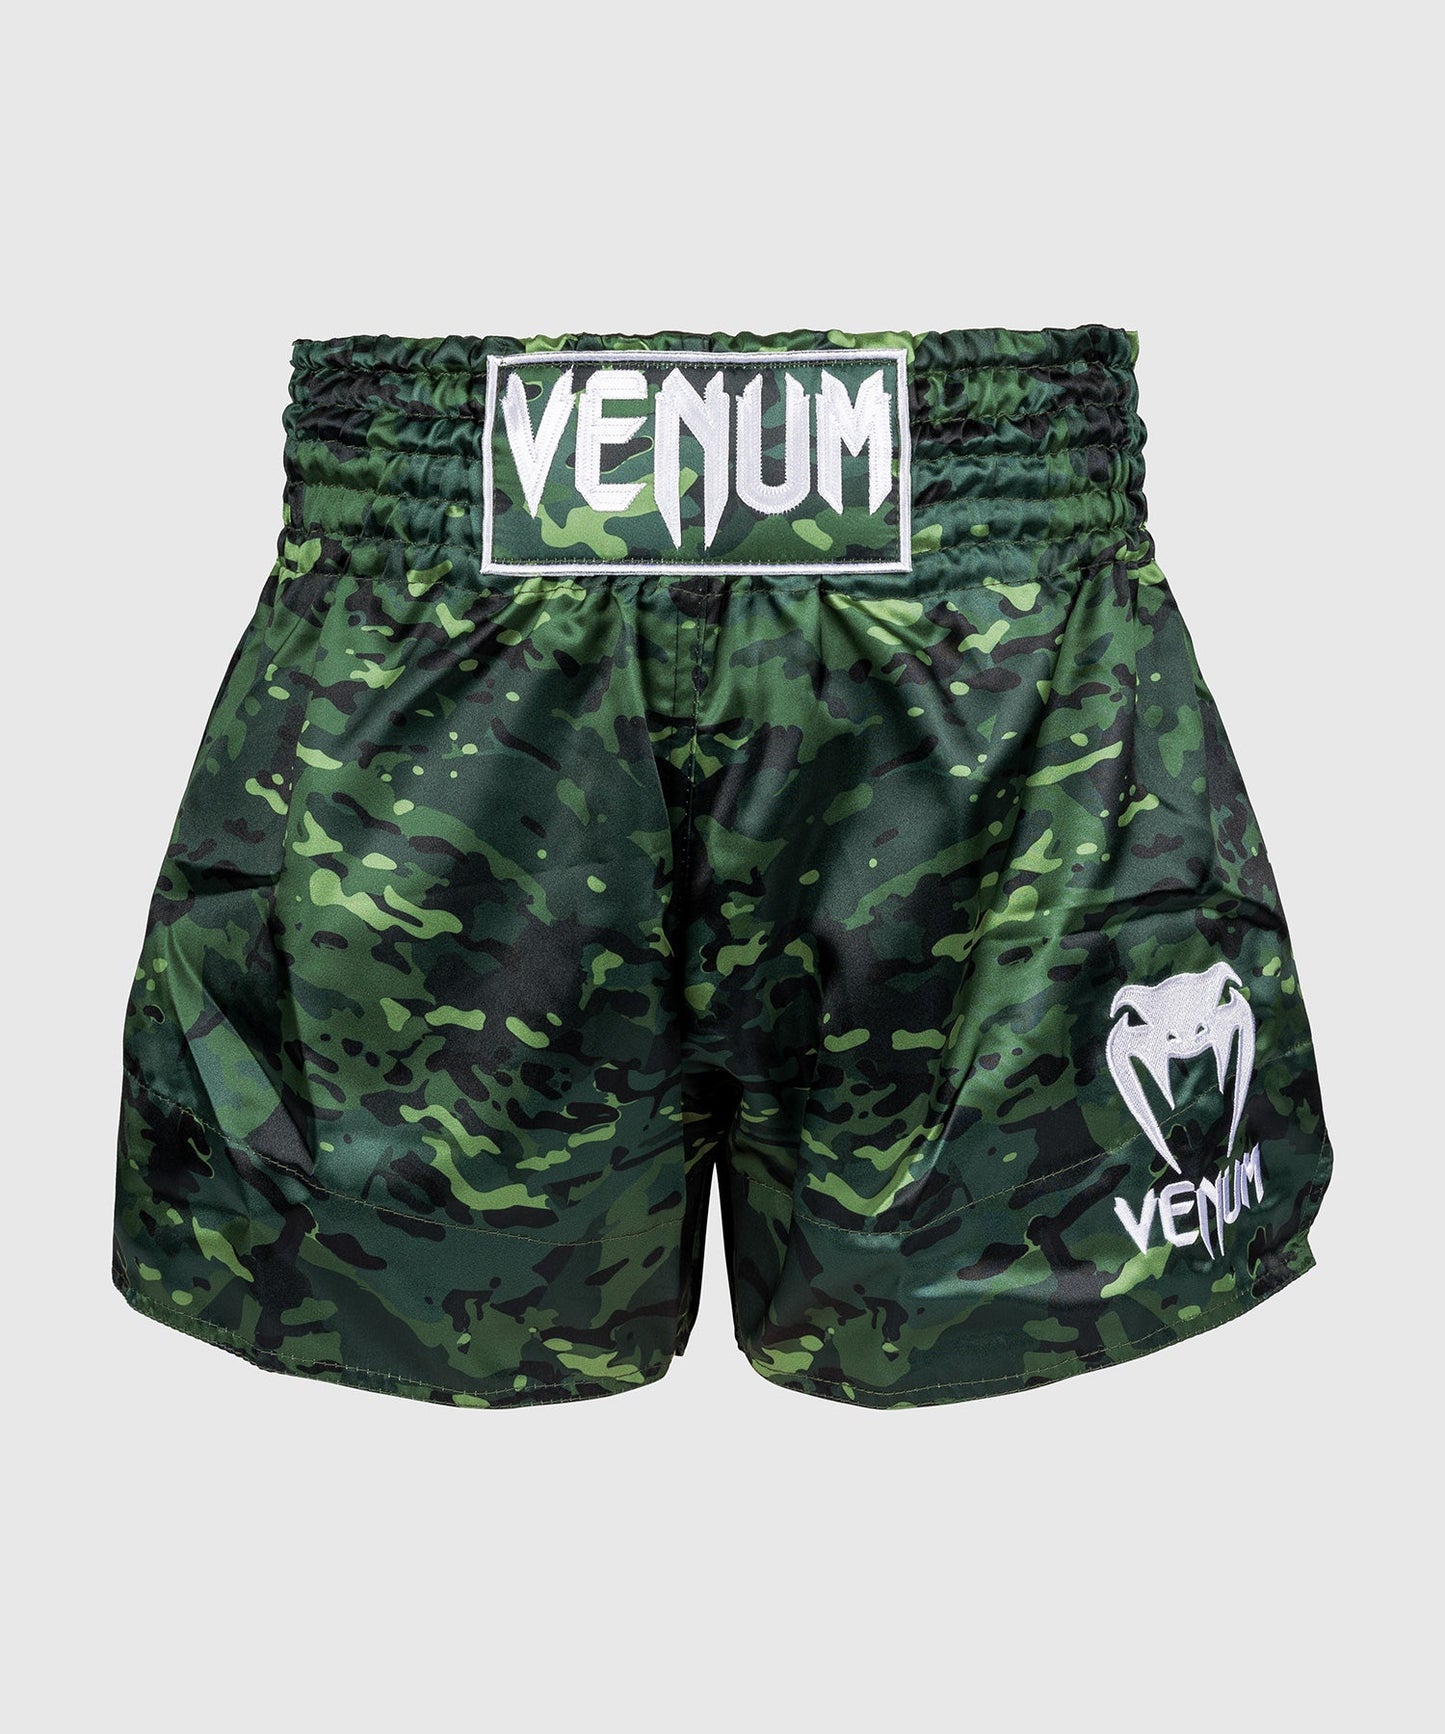 Venum Classic Muay Thai Shorts - Forest Camo